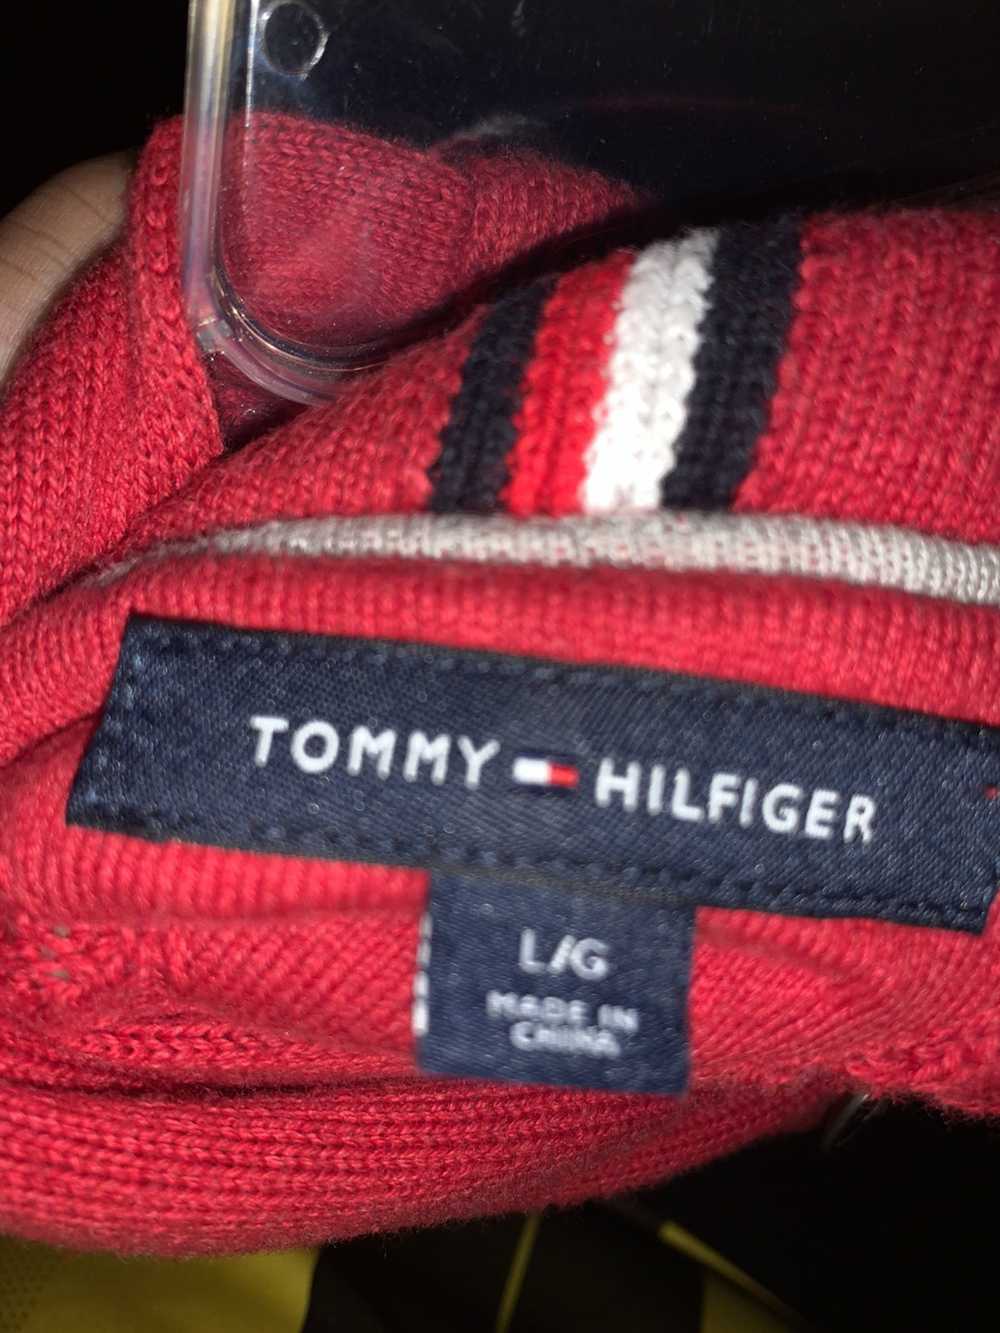 Tommy Hilfiger Rare Tommy Hilfiger Knit - image 3